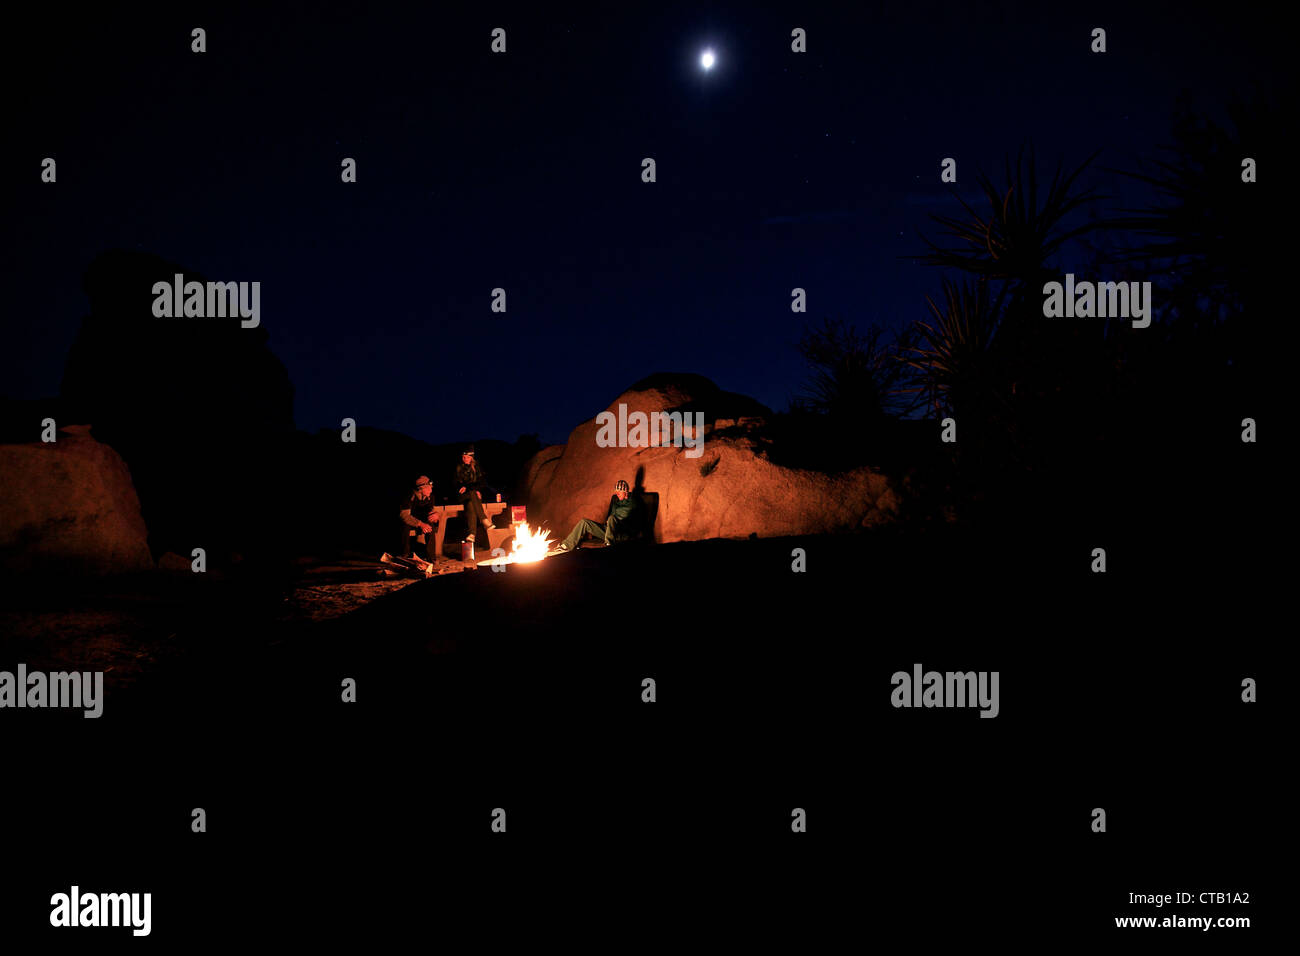 Three people sitting together around a campfire, Joshua Tree National Park, California, USA Stock Photo